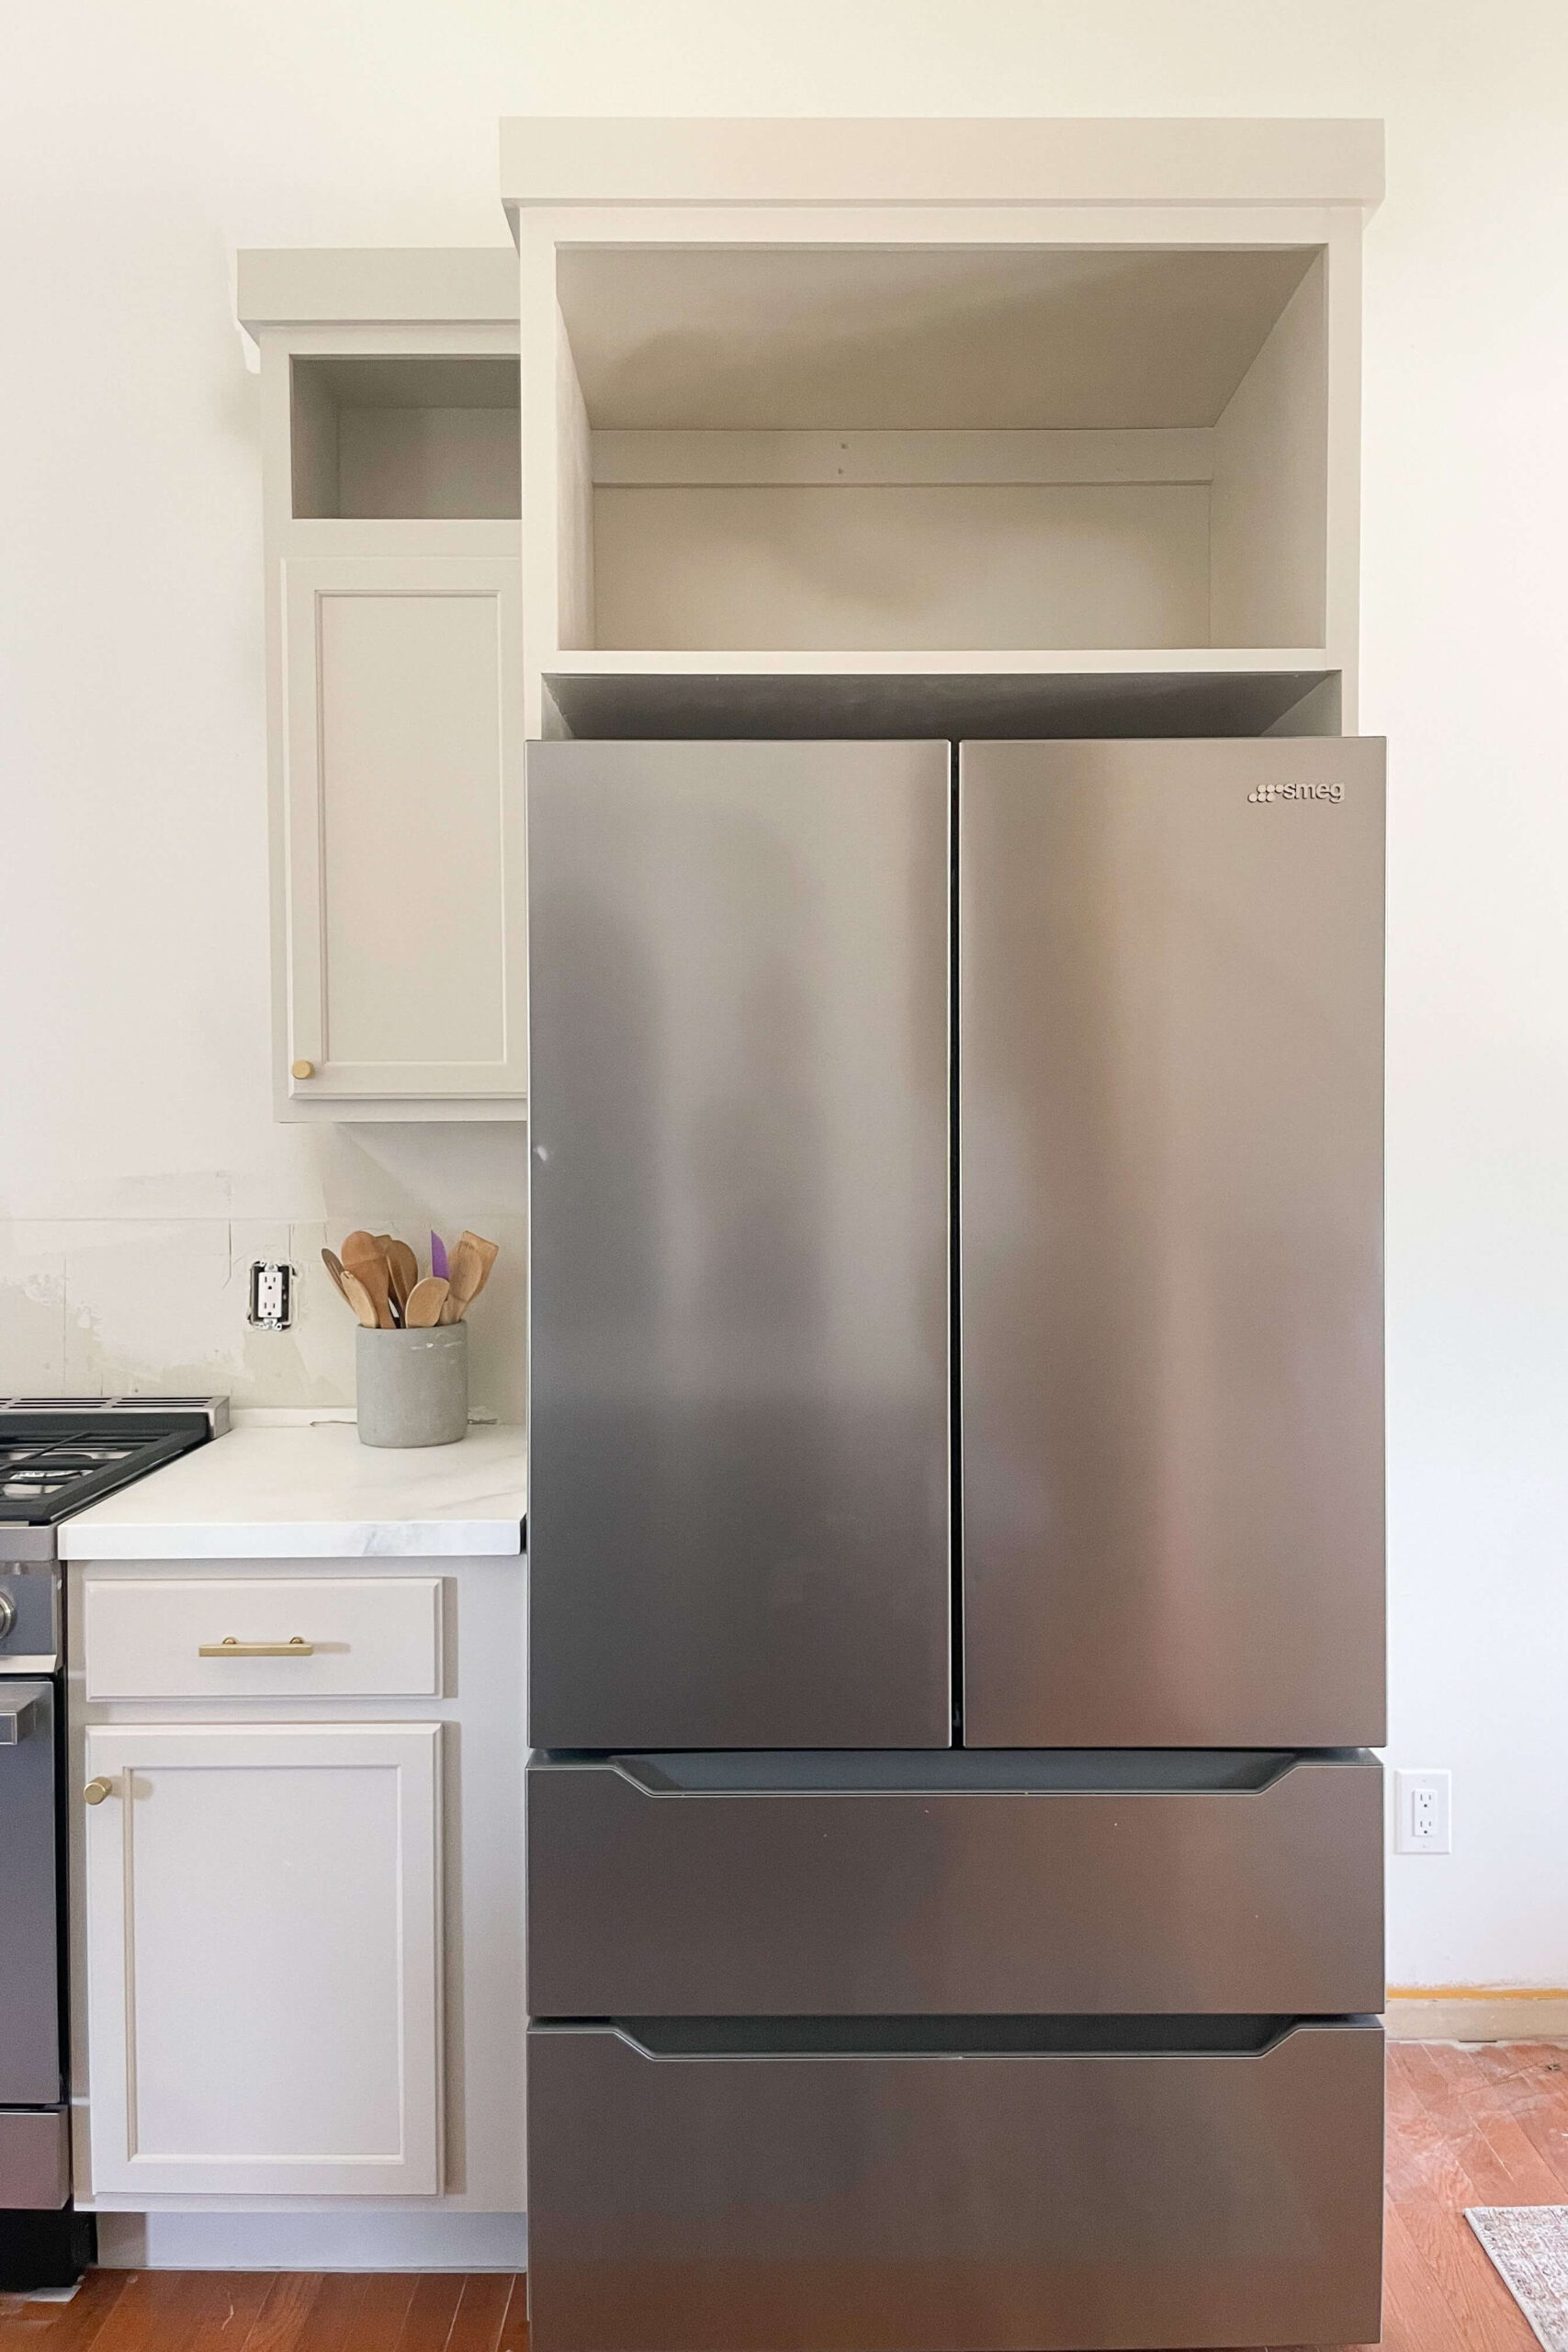 Stainless steel fridge inside of diy refrigerator cabinet.